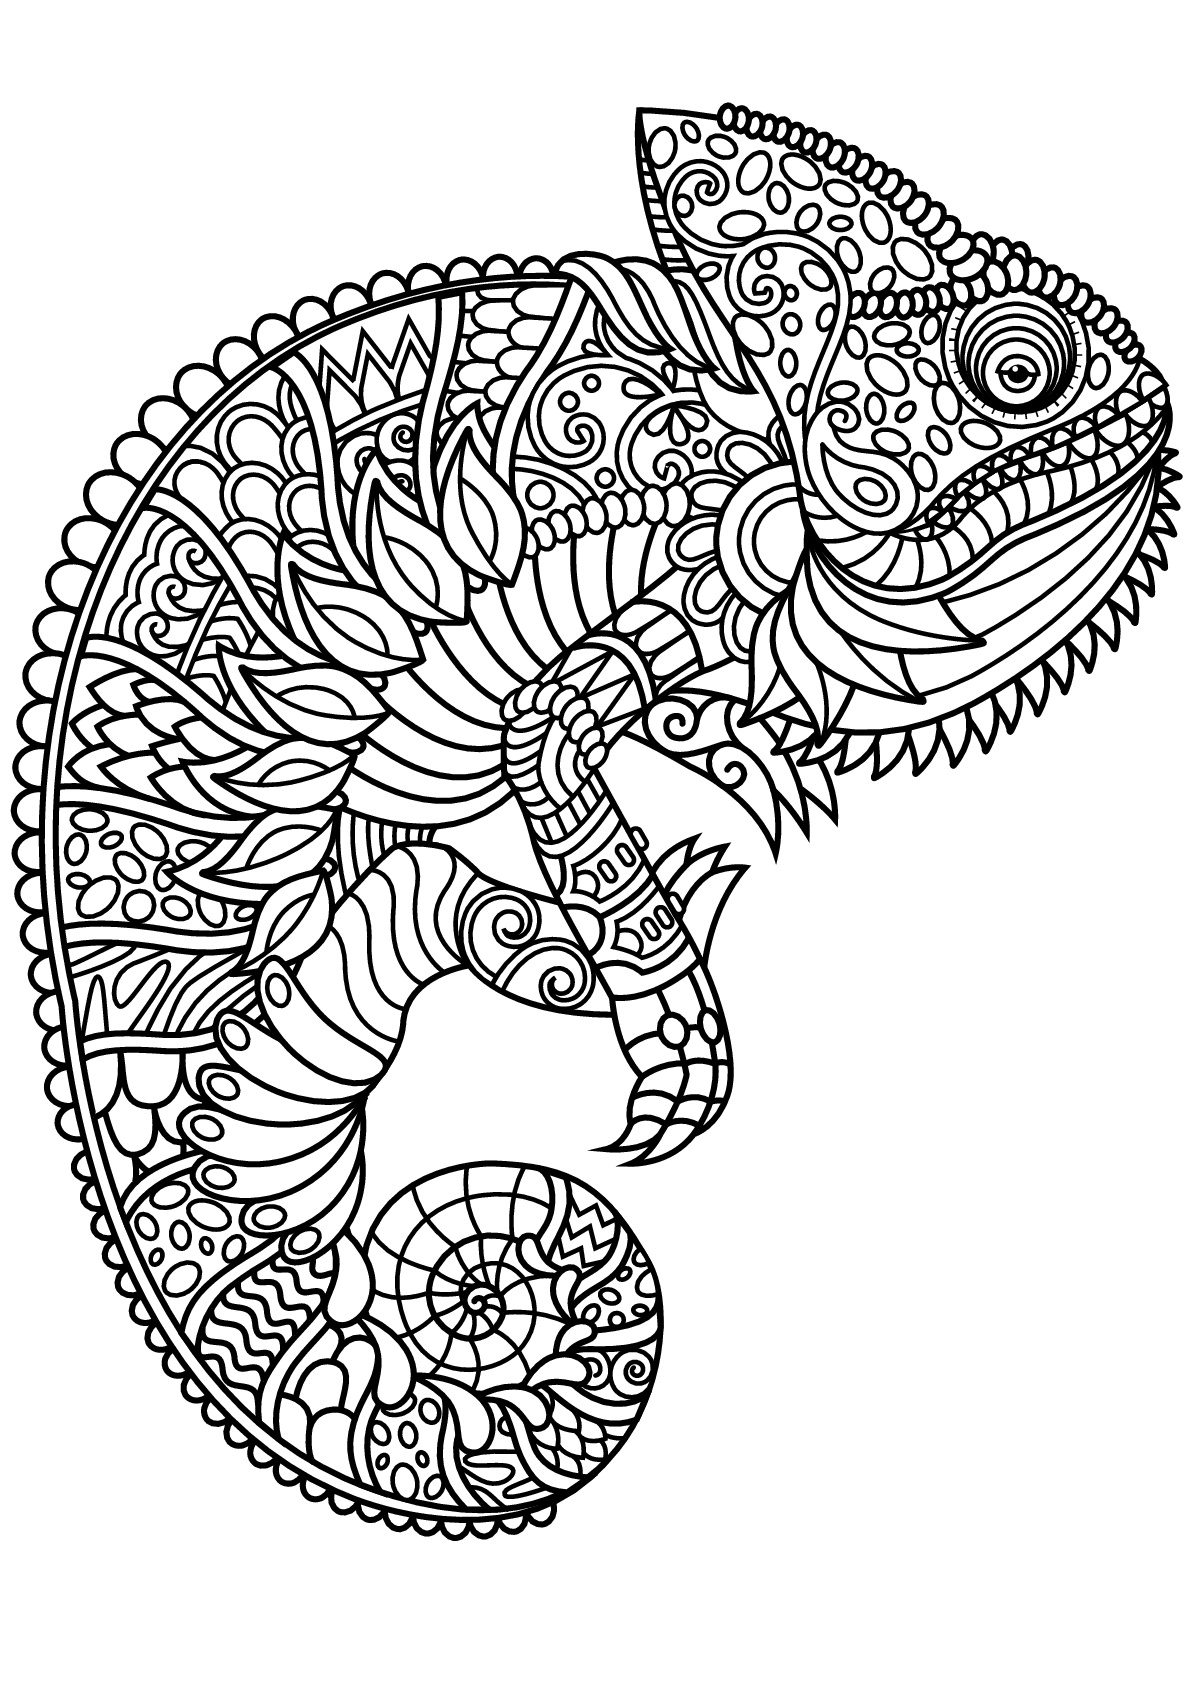 Free book chameleon - Chameleons & lizards Adult Coloring Pages